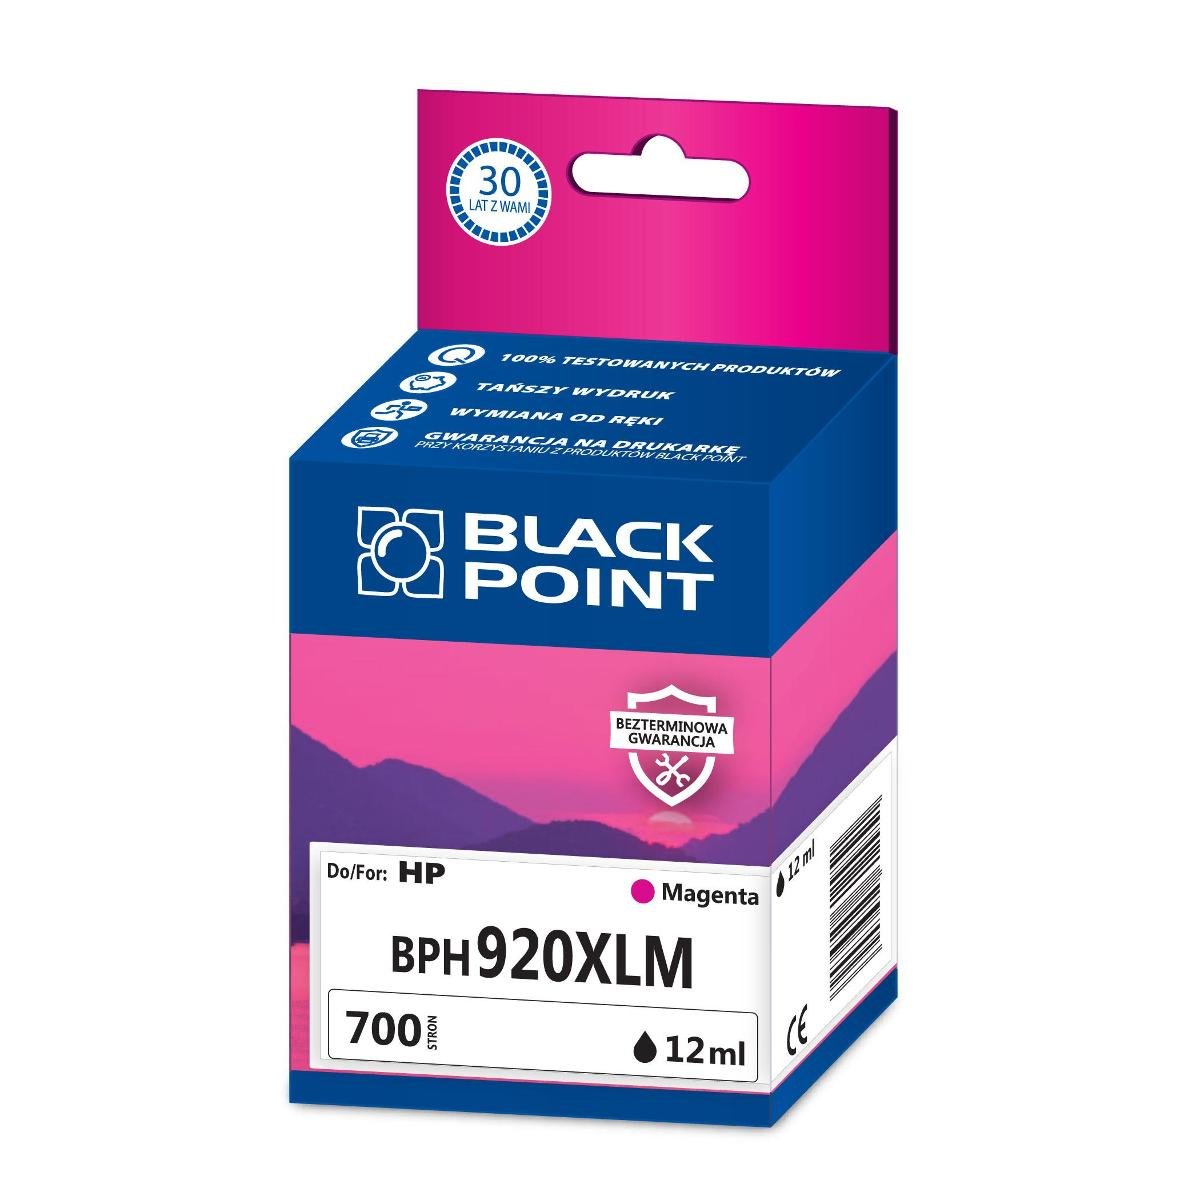 Black Point BPH920XLM zamiennik HP CD973AE